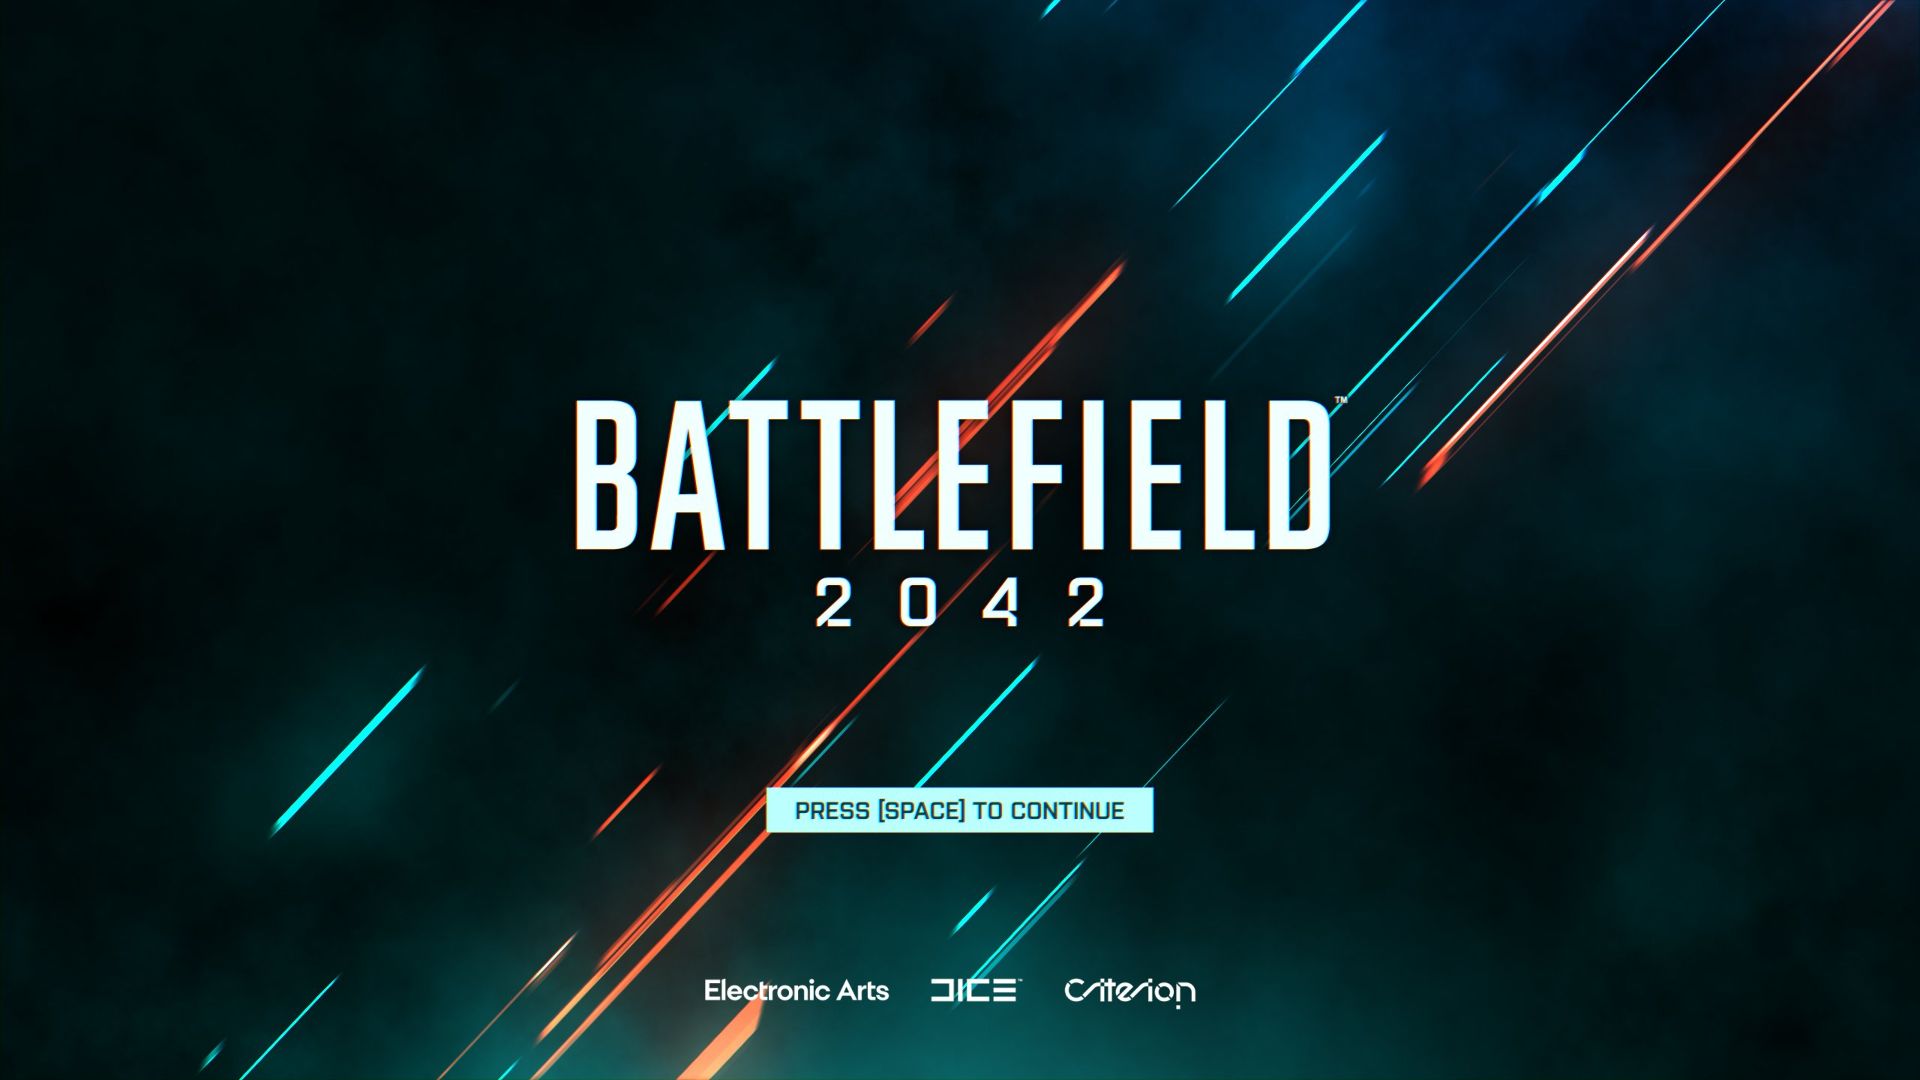 Battlefield 2042 Wallpaper Download